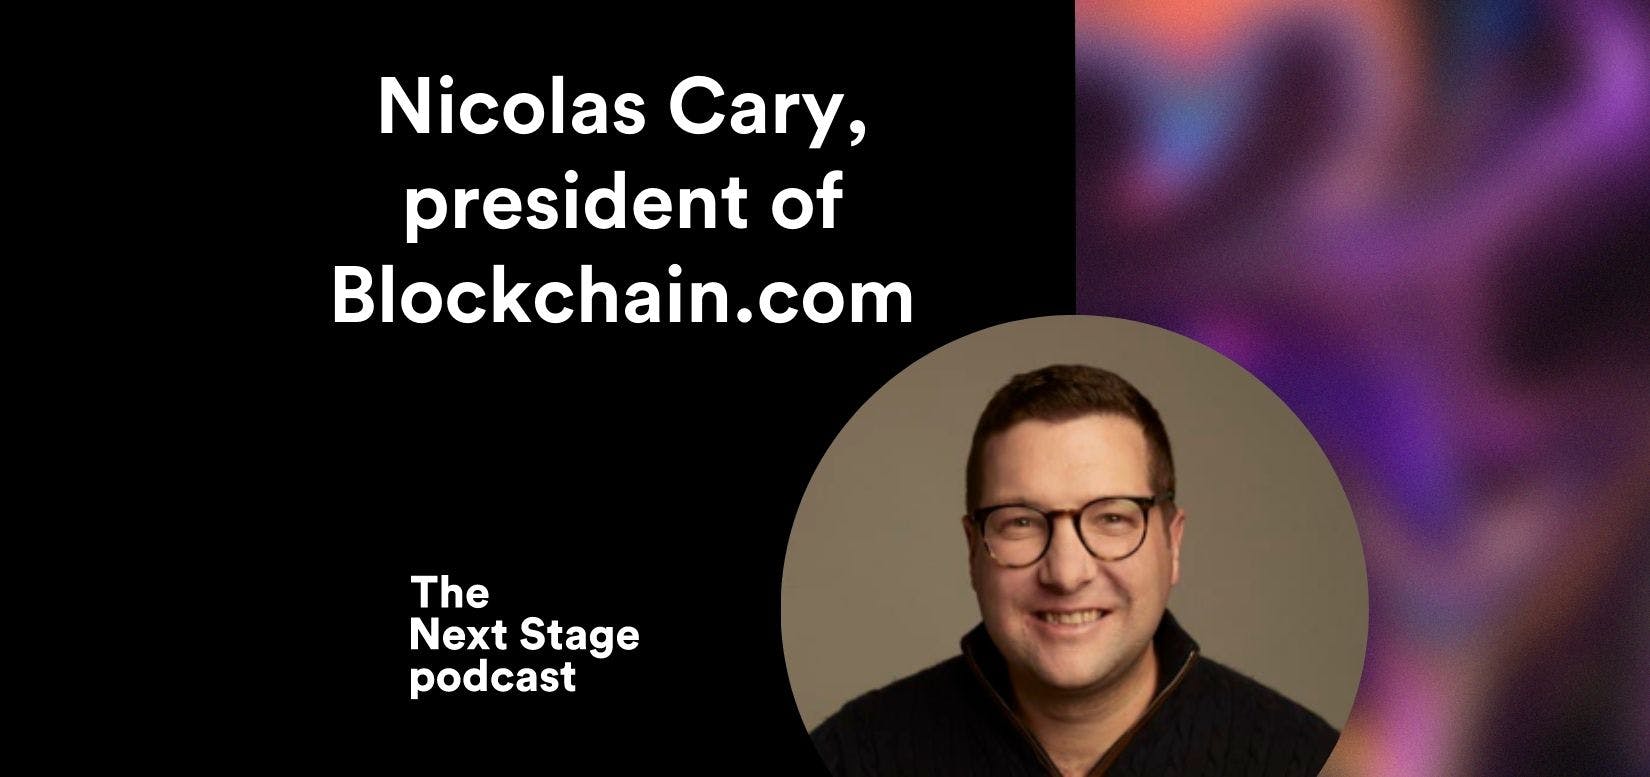 Nicolas Cary, president of Blockchain.com